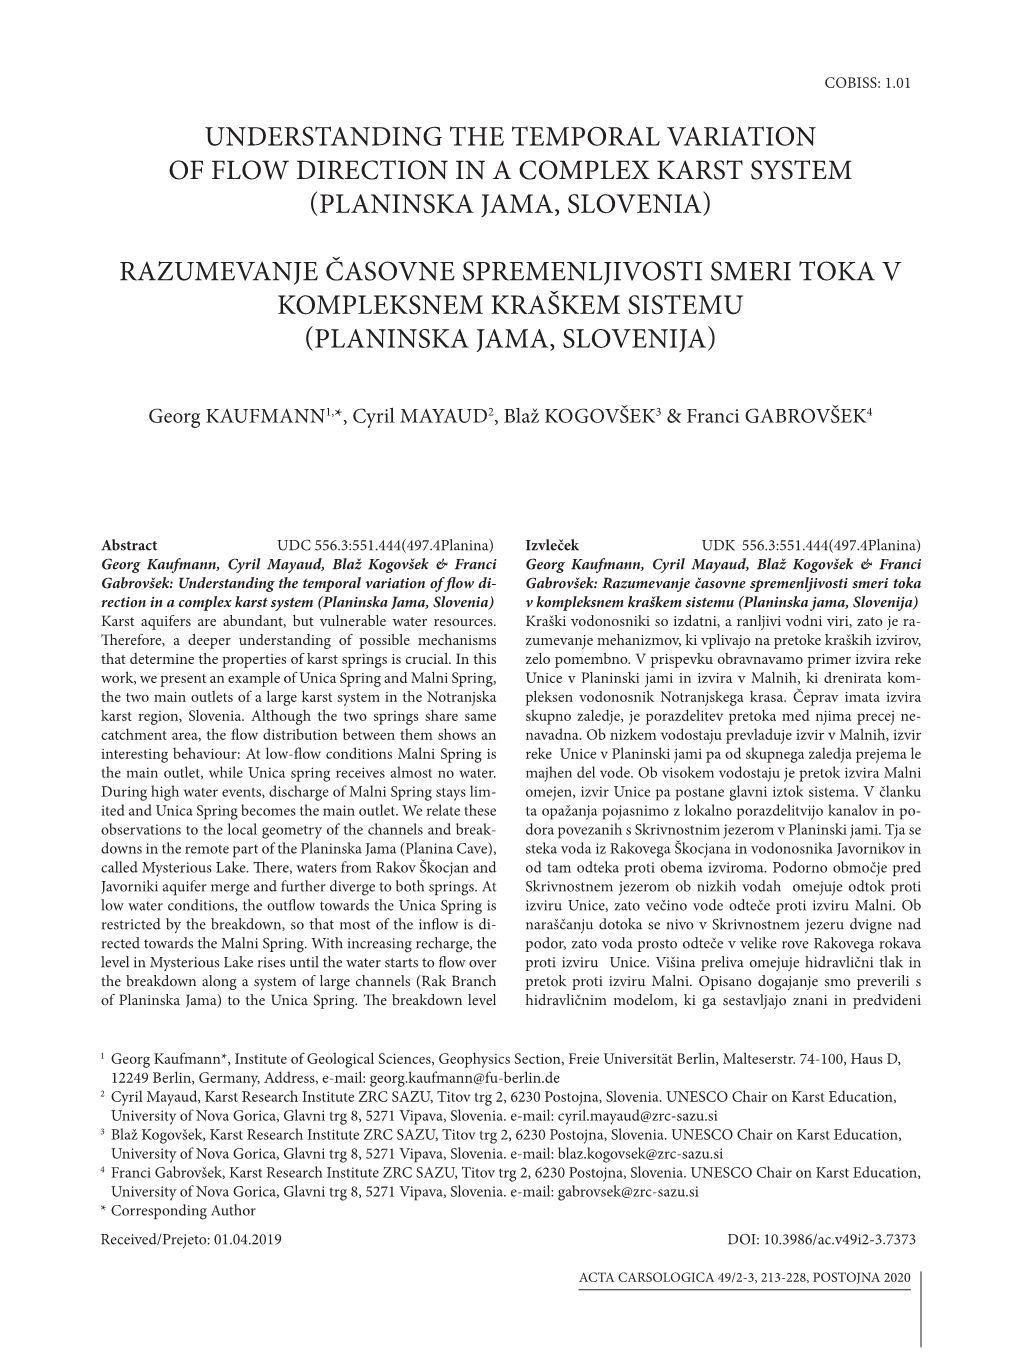 Understanding the Temporal Variation of Flow Direction in a Complex Karst System (Planinska Jama, Slovenia)